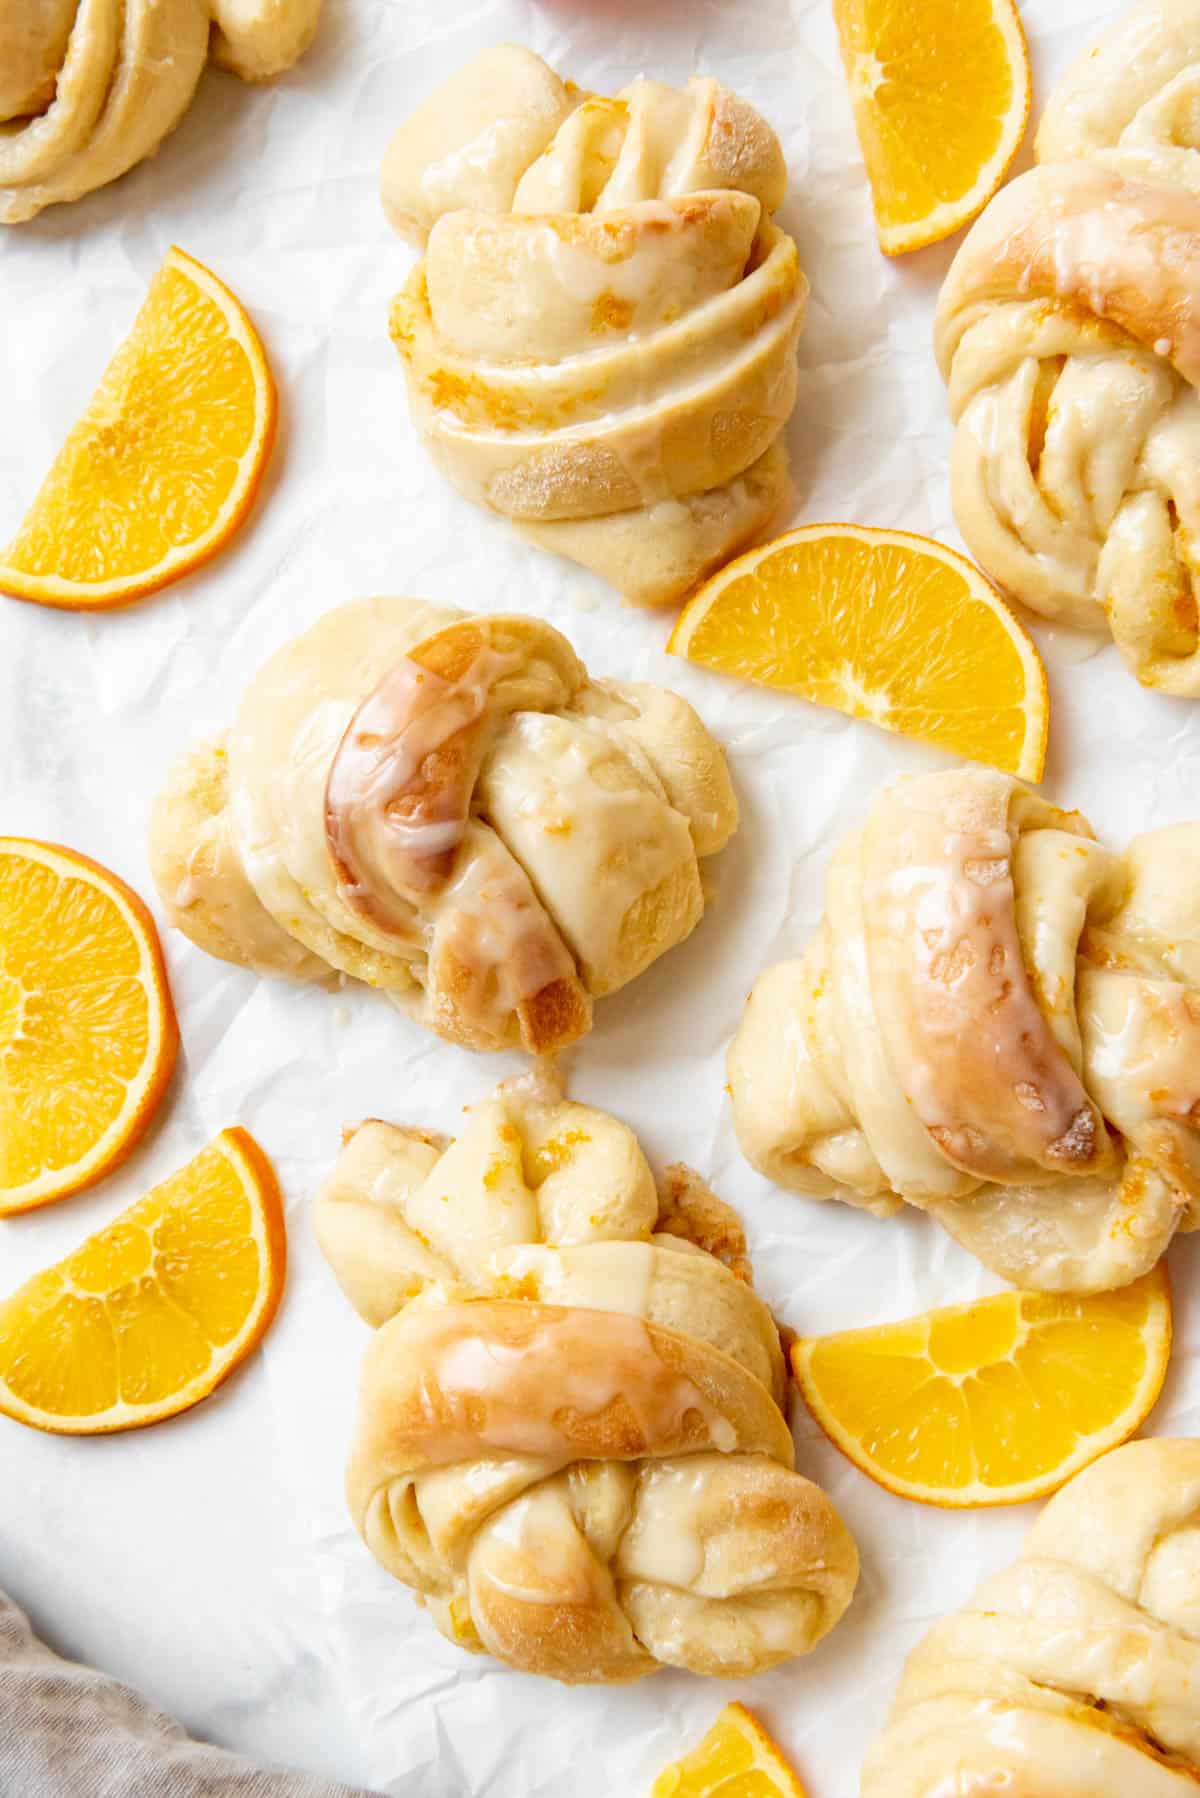 An overhead image of orange sweet rolls with orange slices.